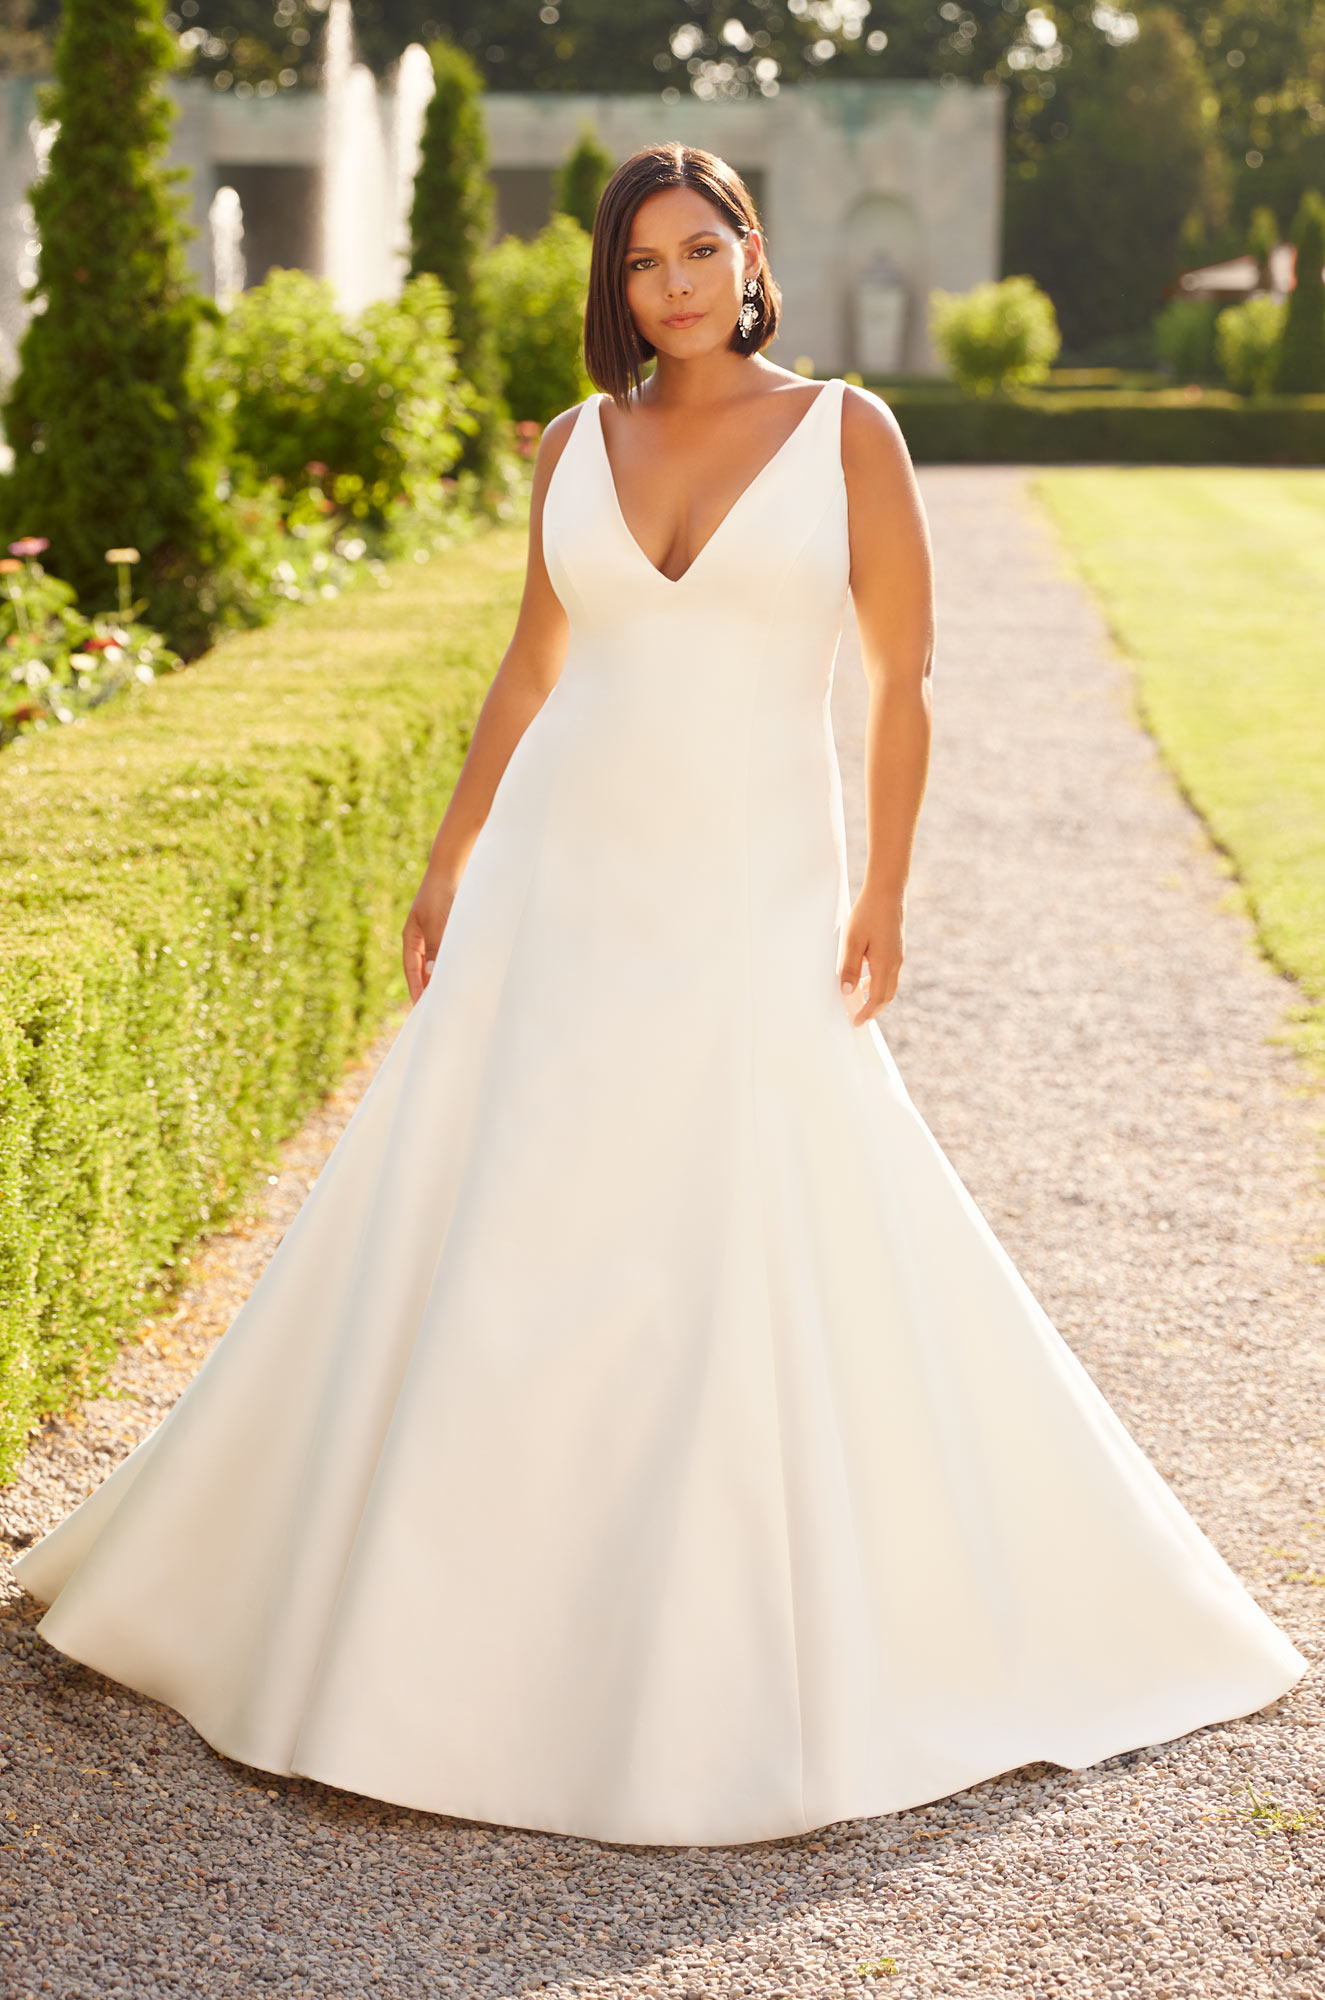 Aktuator Tumult Paine Gillic Sleeveless A-line Wedding Dress With V-neckline And Bow At Back | Kleinfeld  Bridal